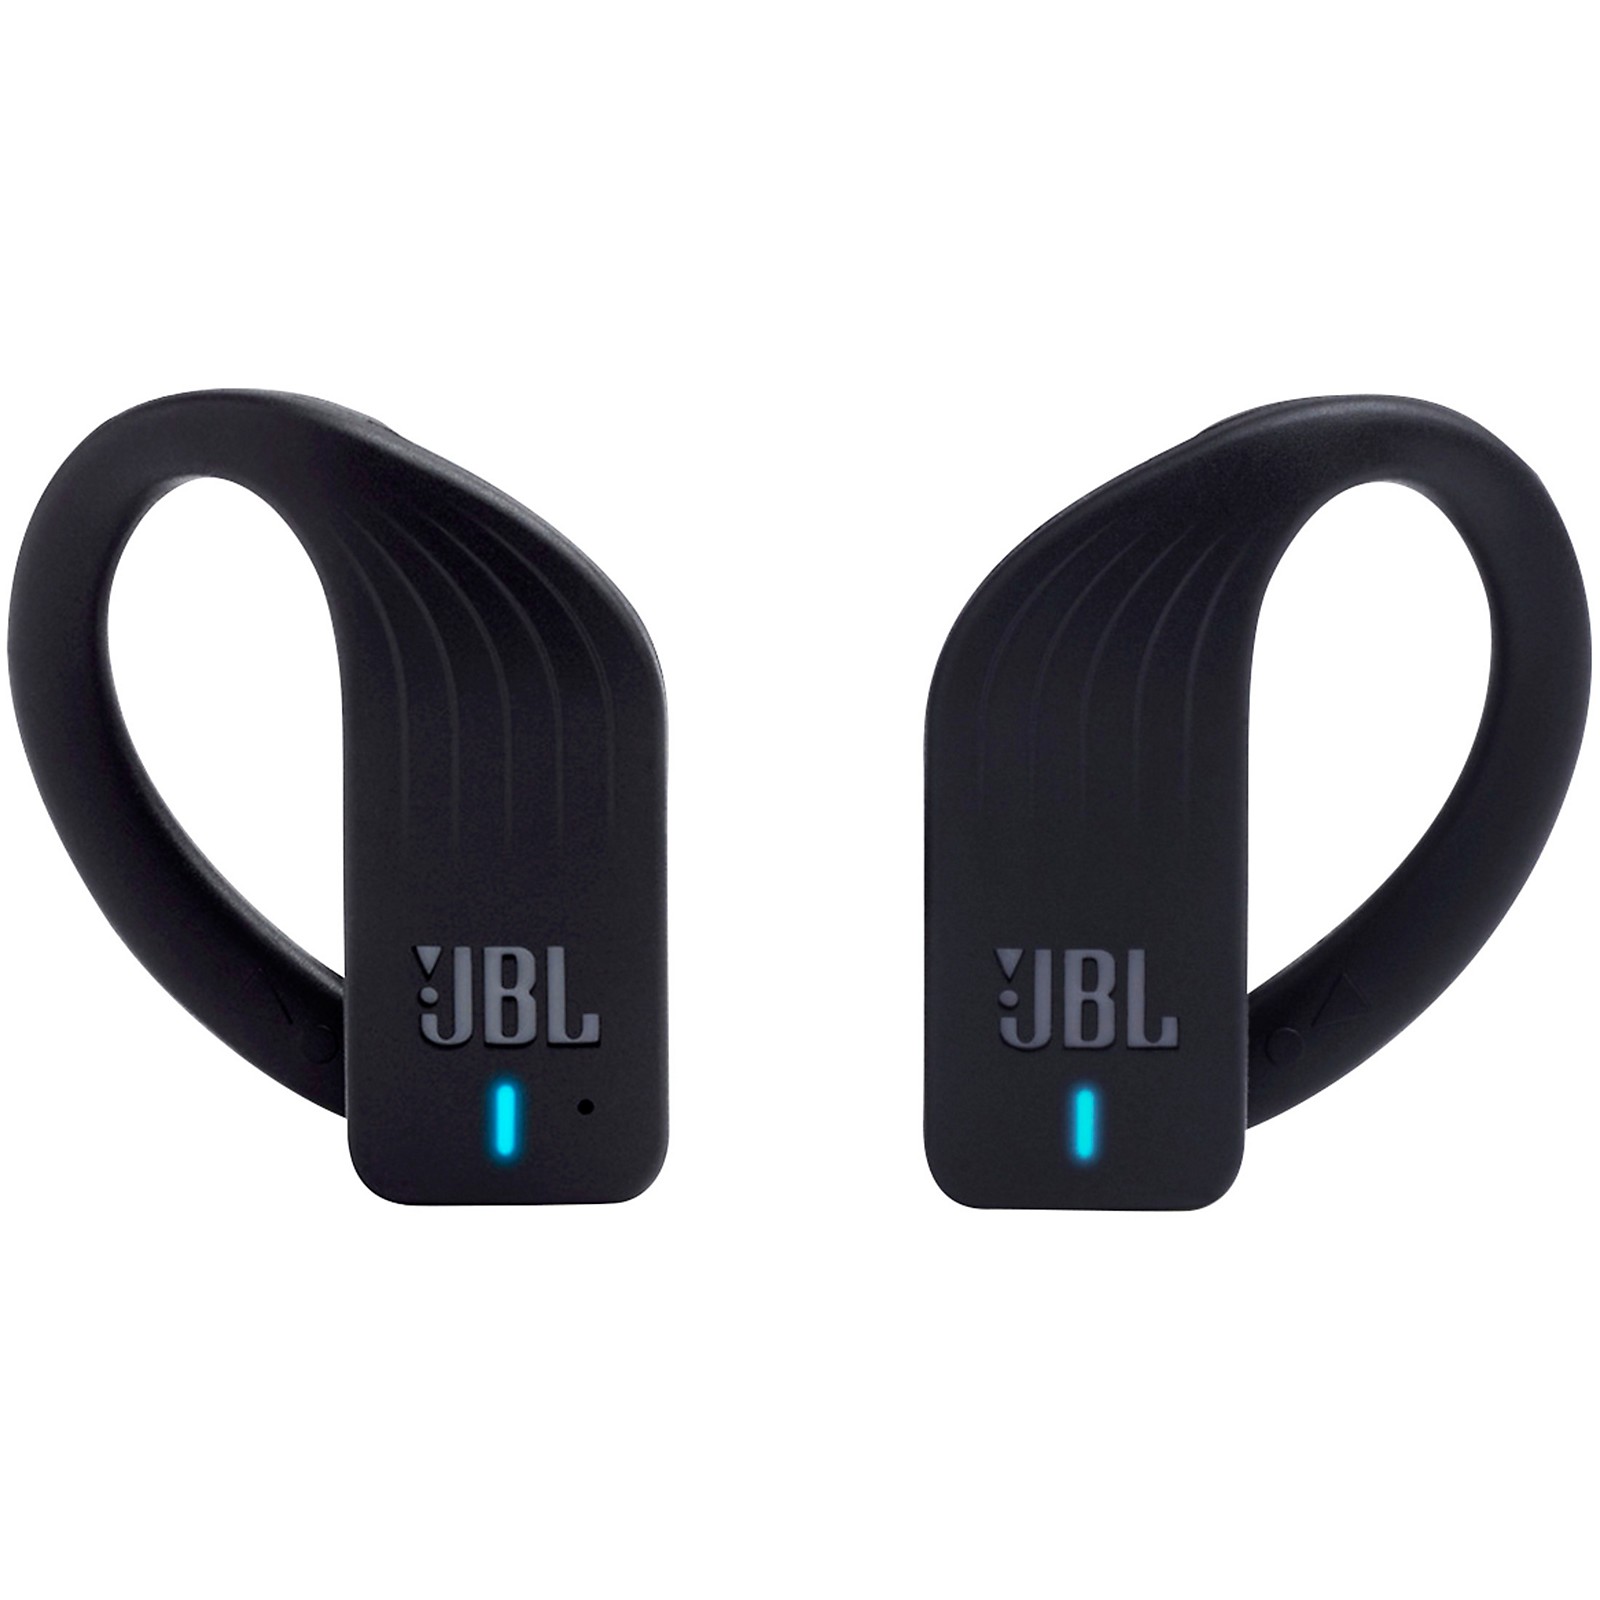 jbl endurance peak wireless earbuds